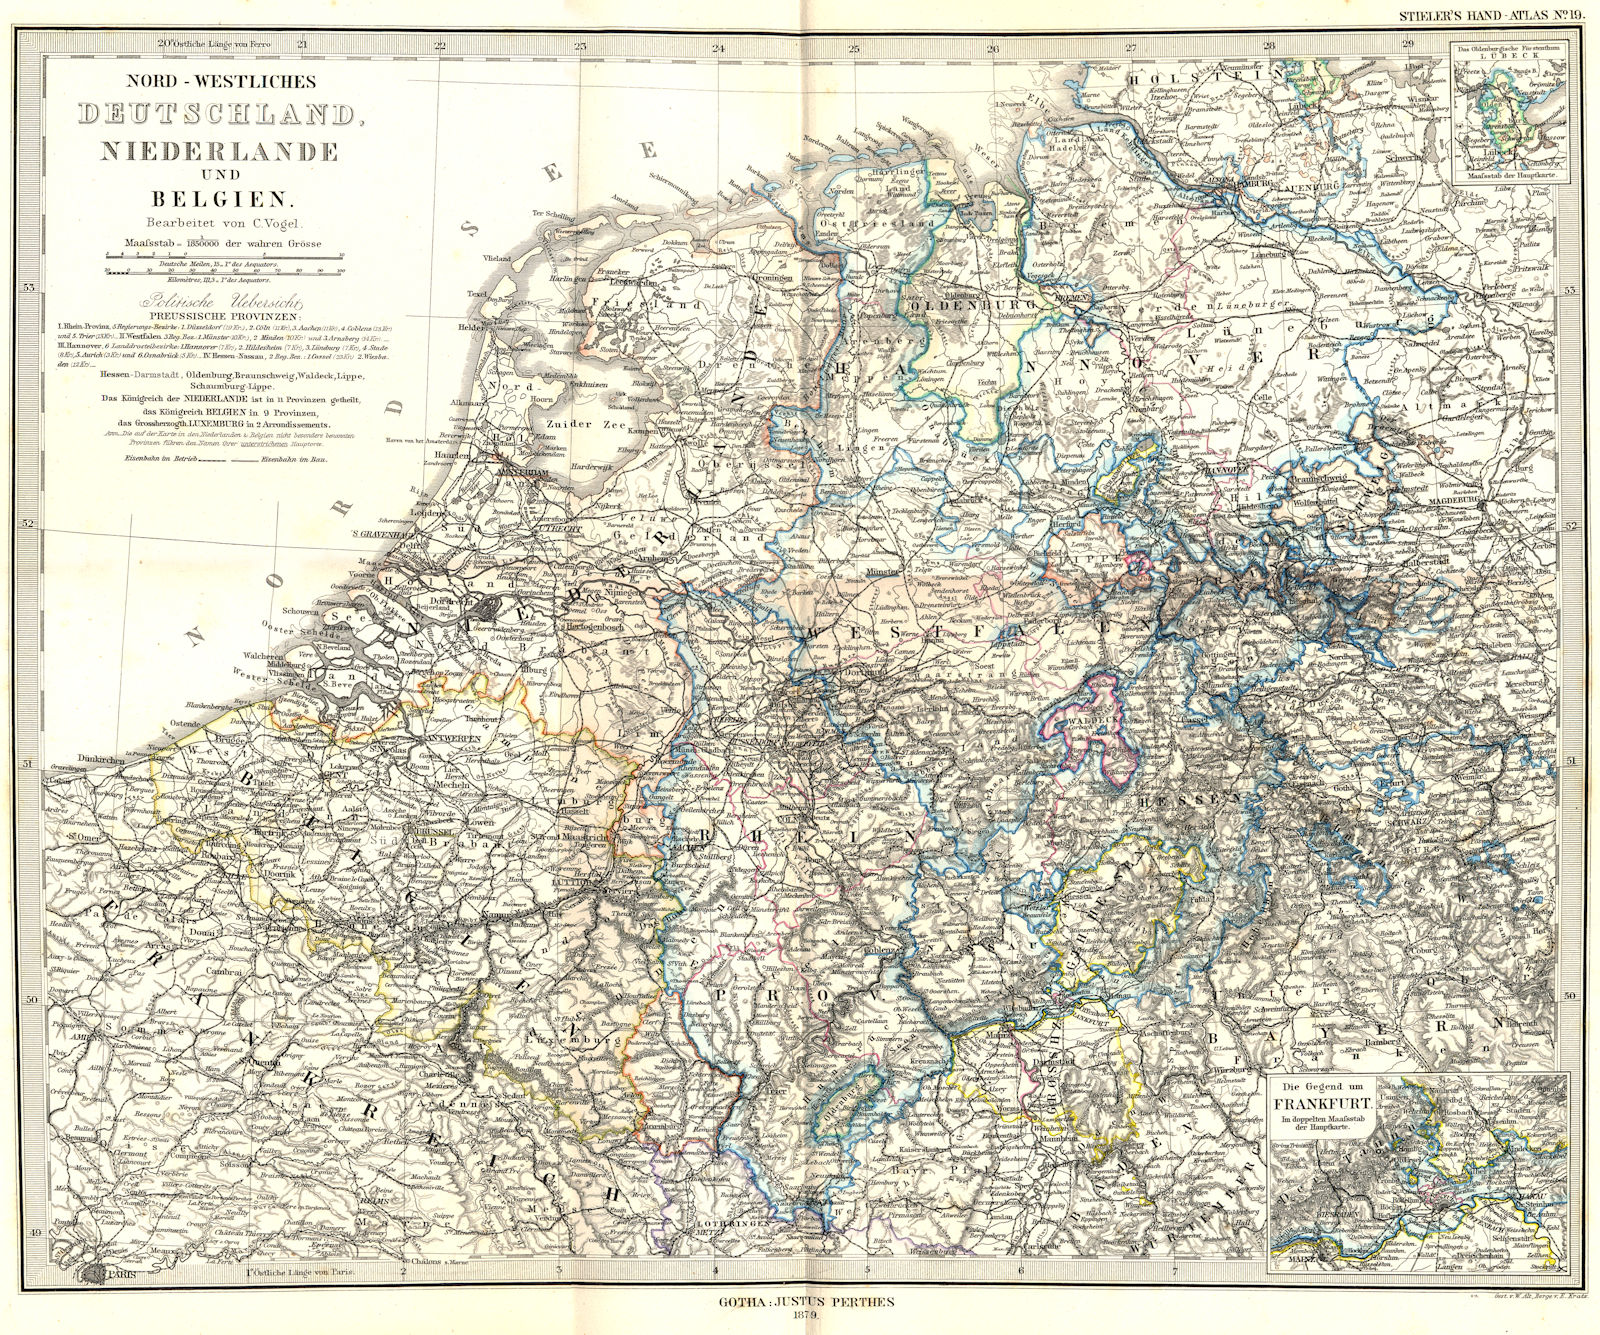 Associate Product DEUTSCHLAND. Niederlande Belgien; Frankfurt 1879 old antique map plan chart